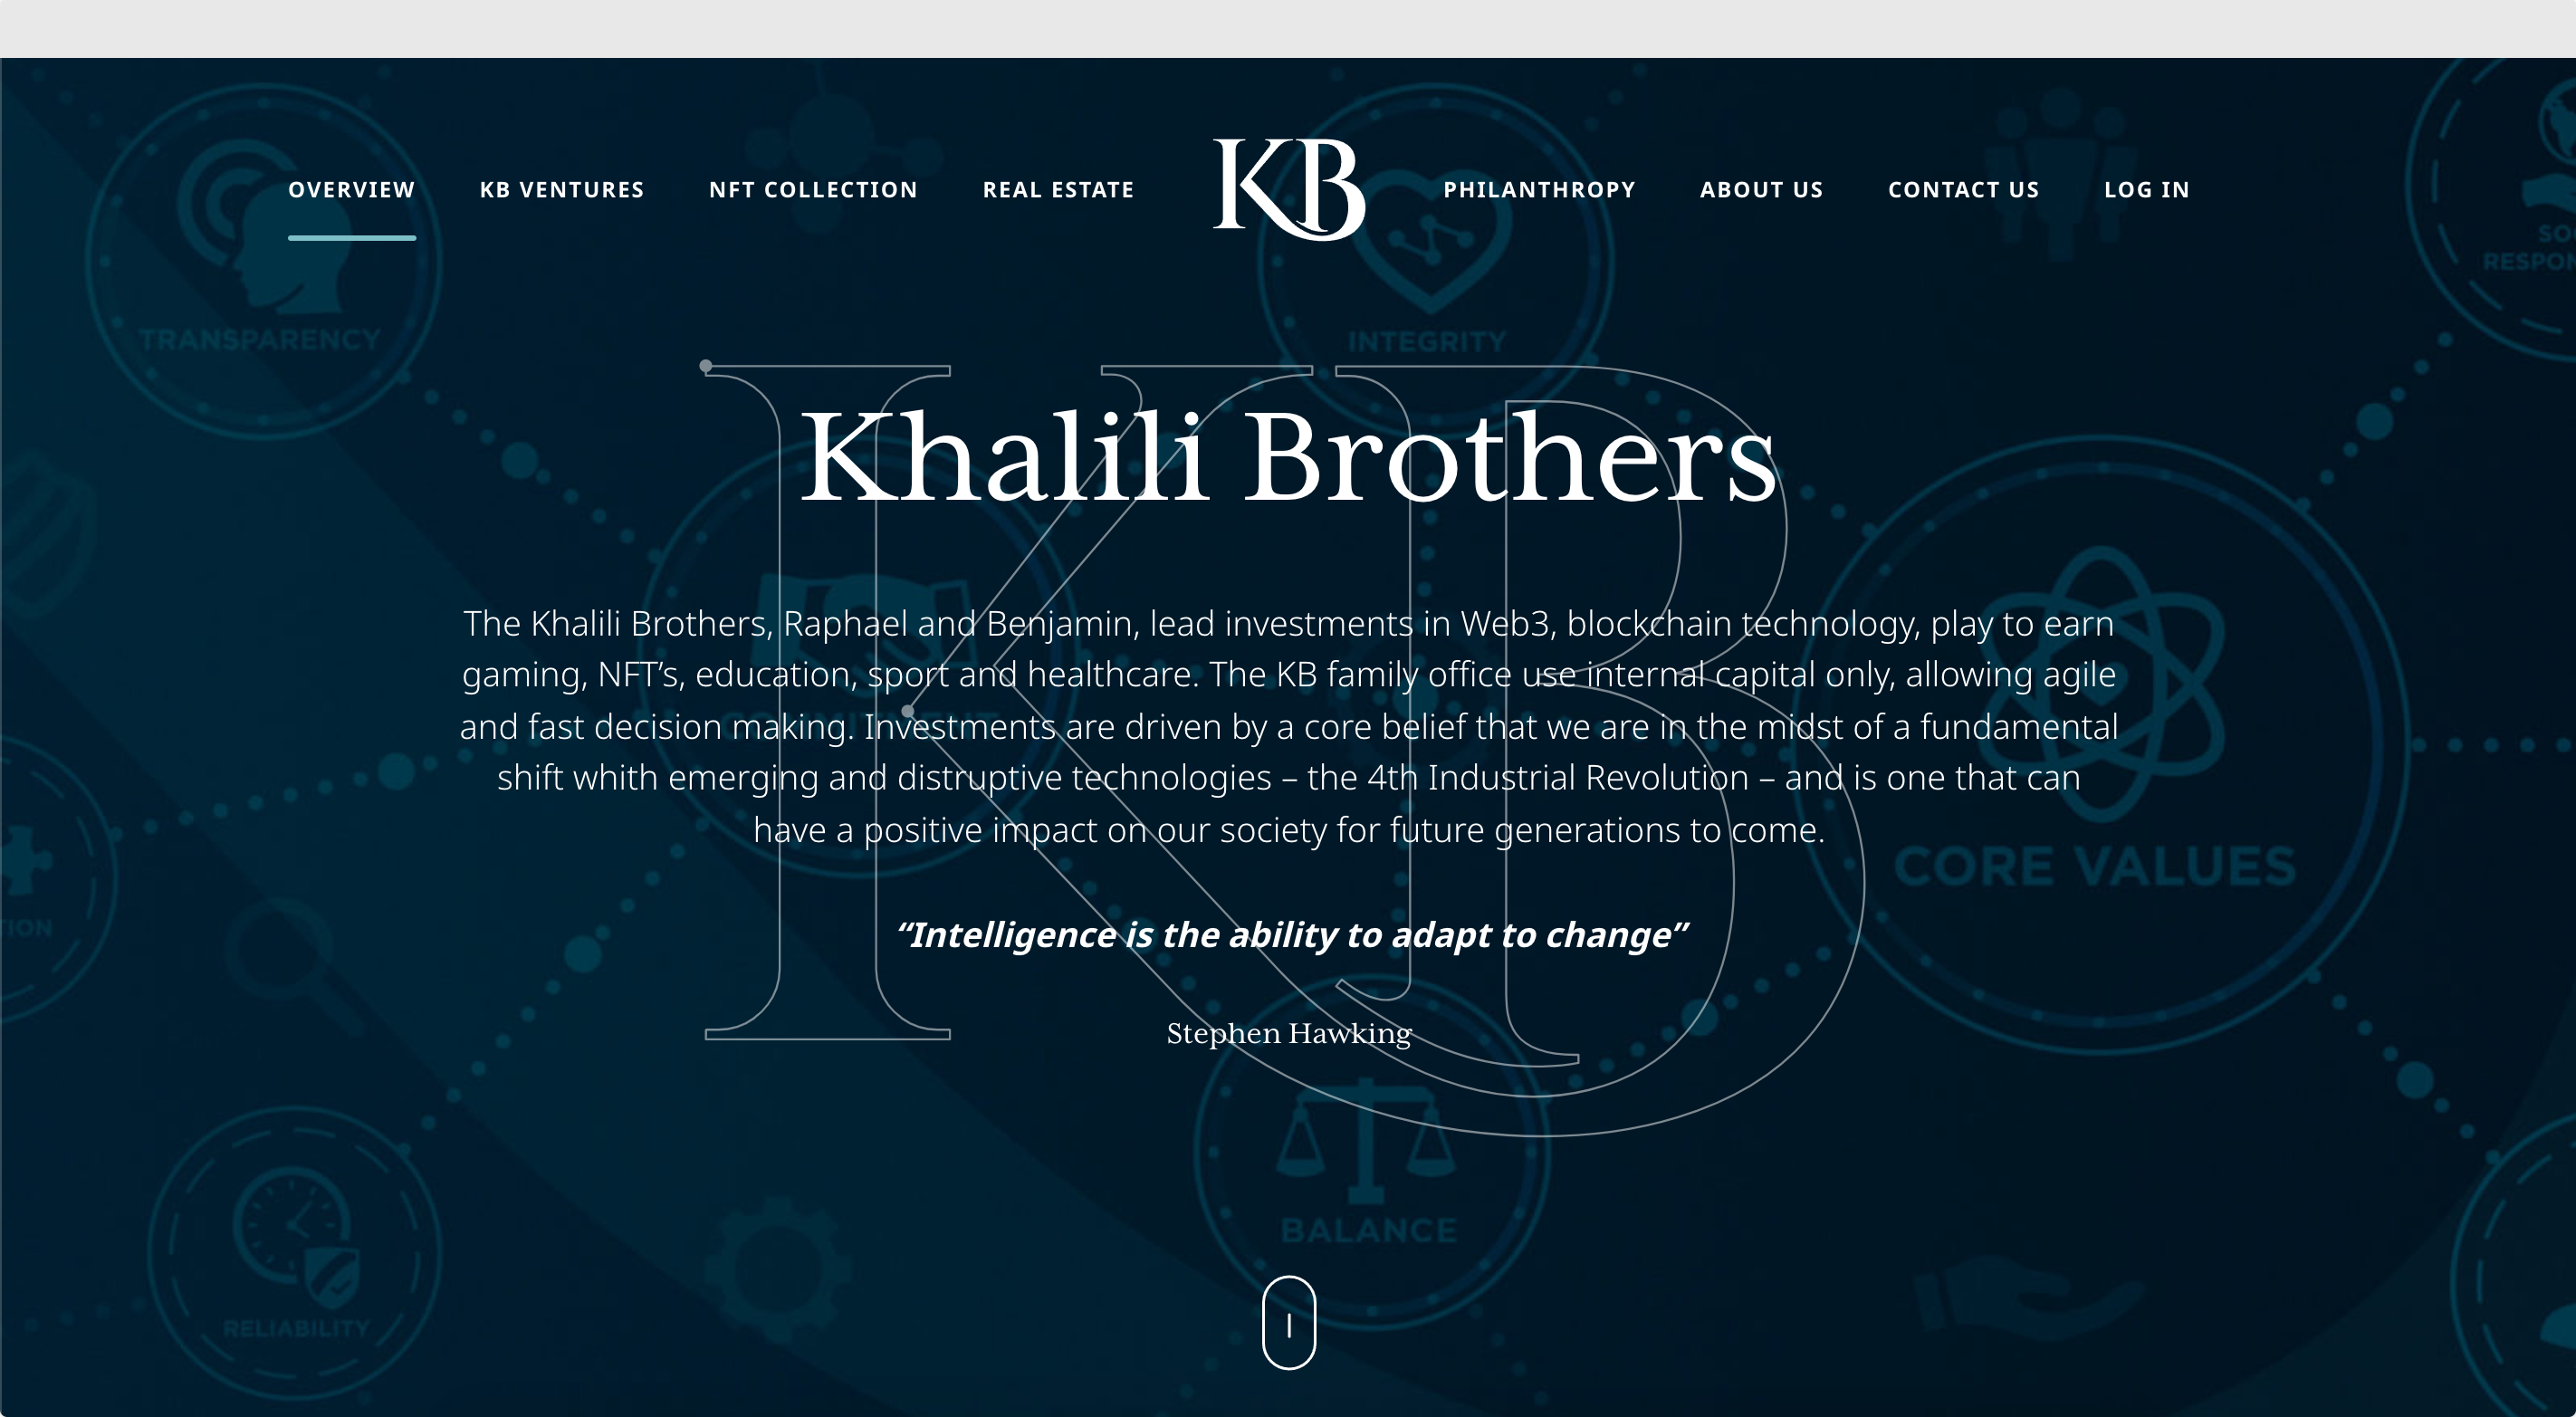 Khalili Brothers - Featured image